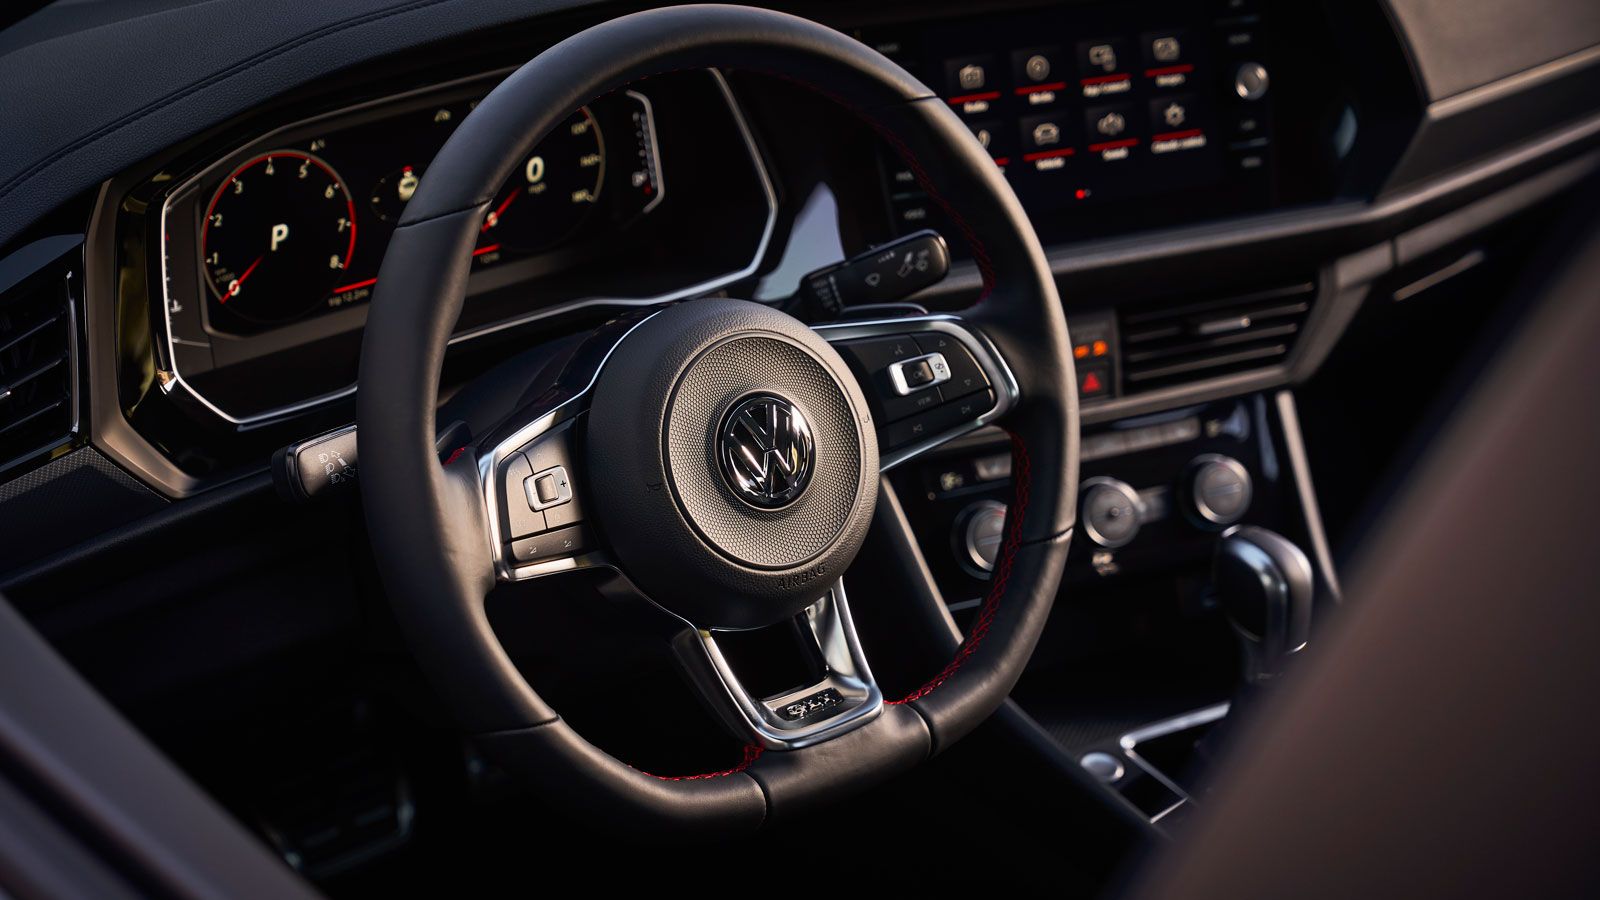 Gallery: 2019 Volkswagen Jetta GLI interior